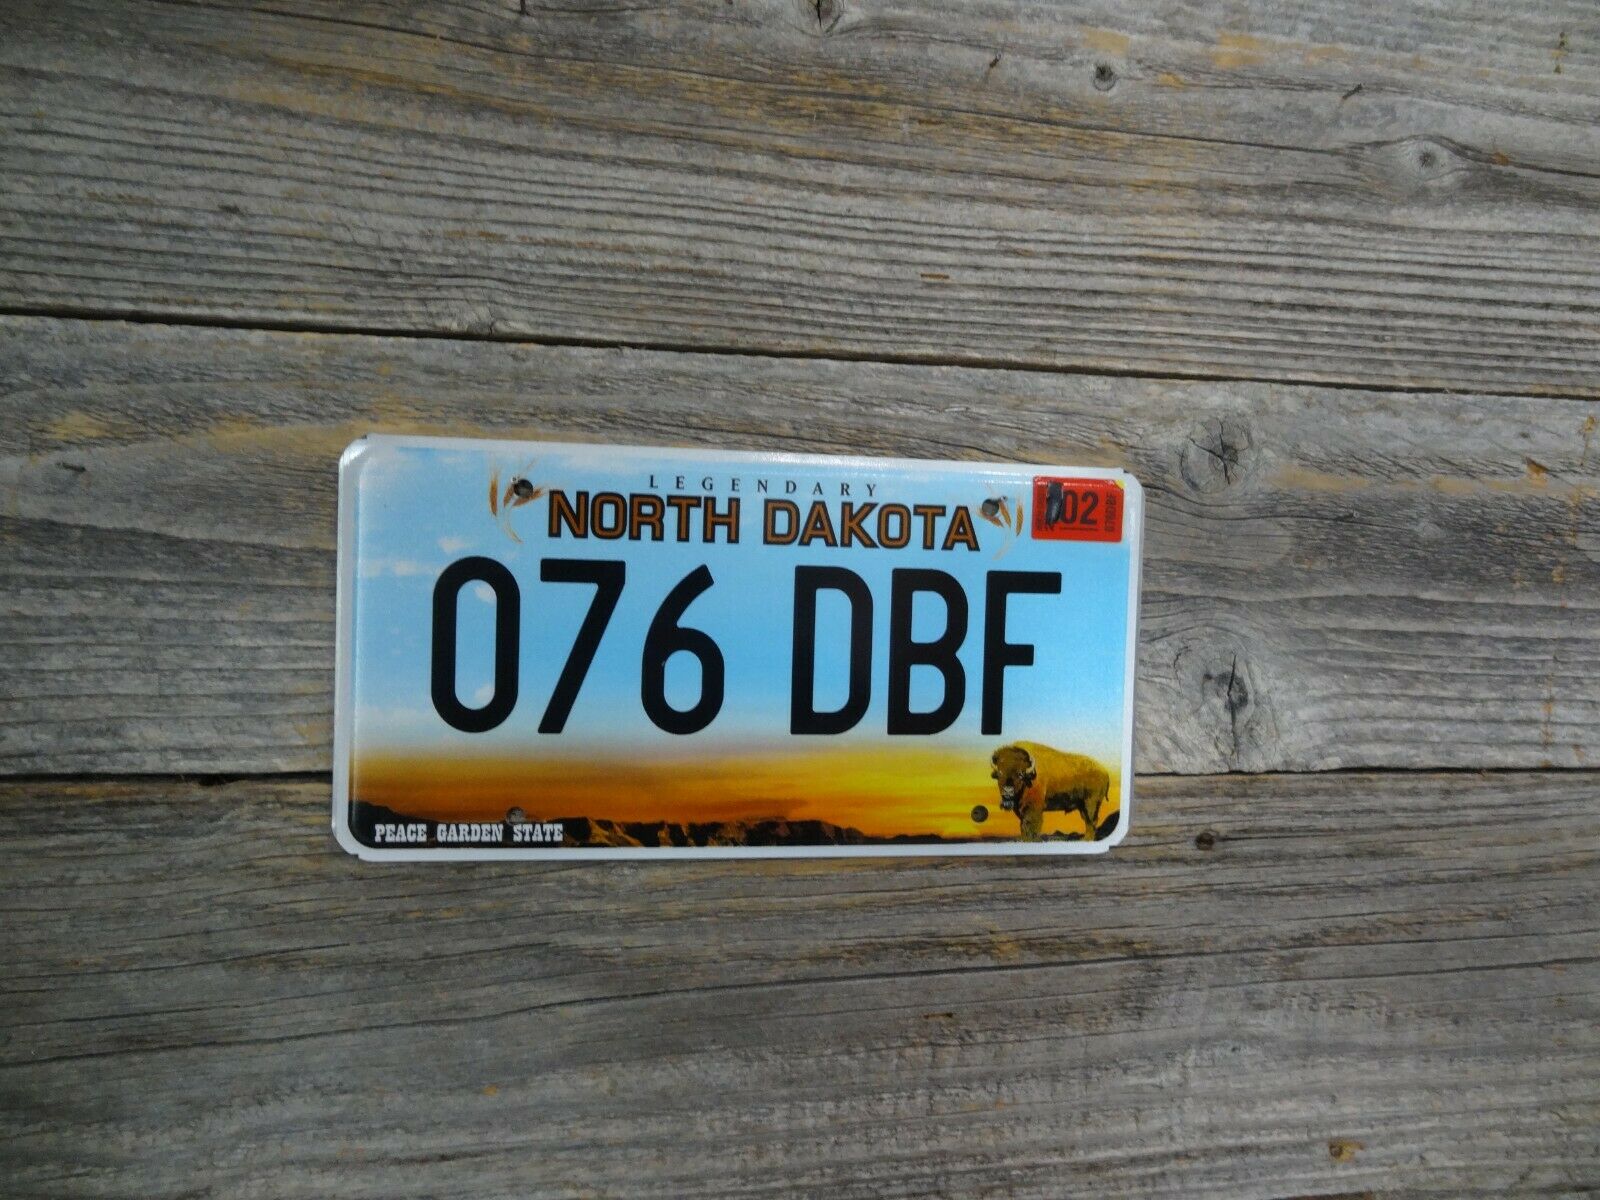 North Dakota New Font License Plate All Original Peace Garden State Buffalo!!!!!